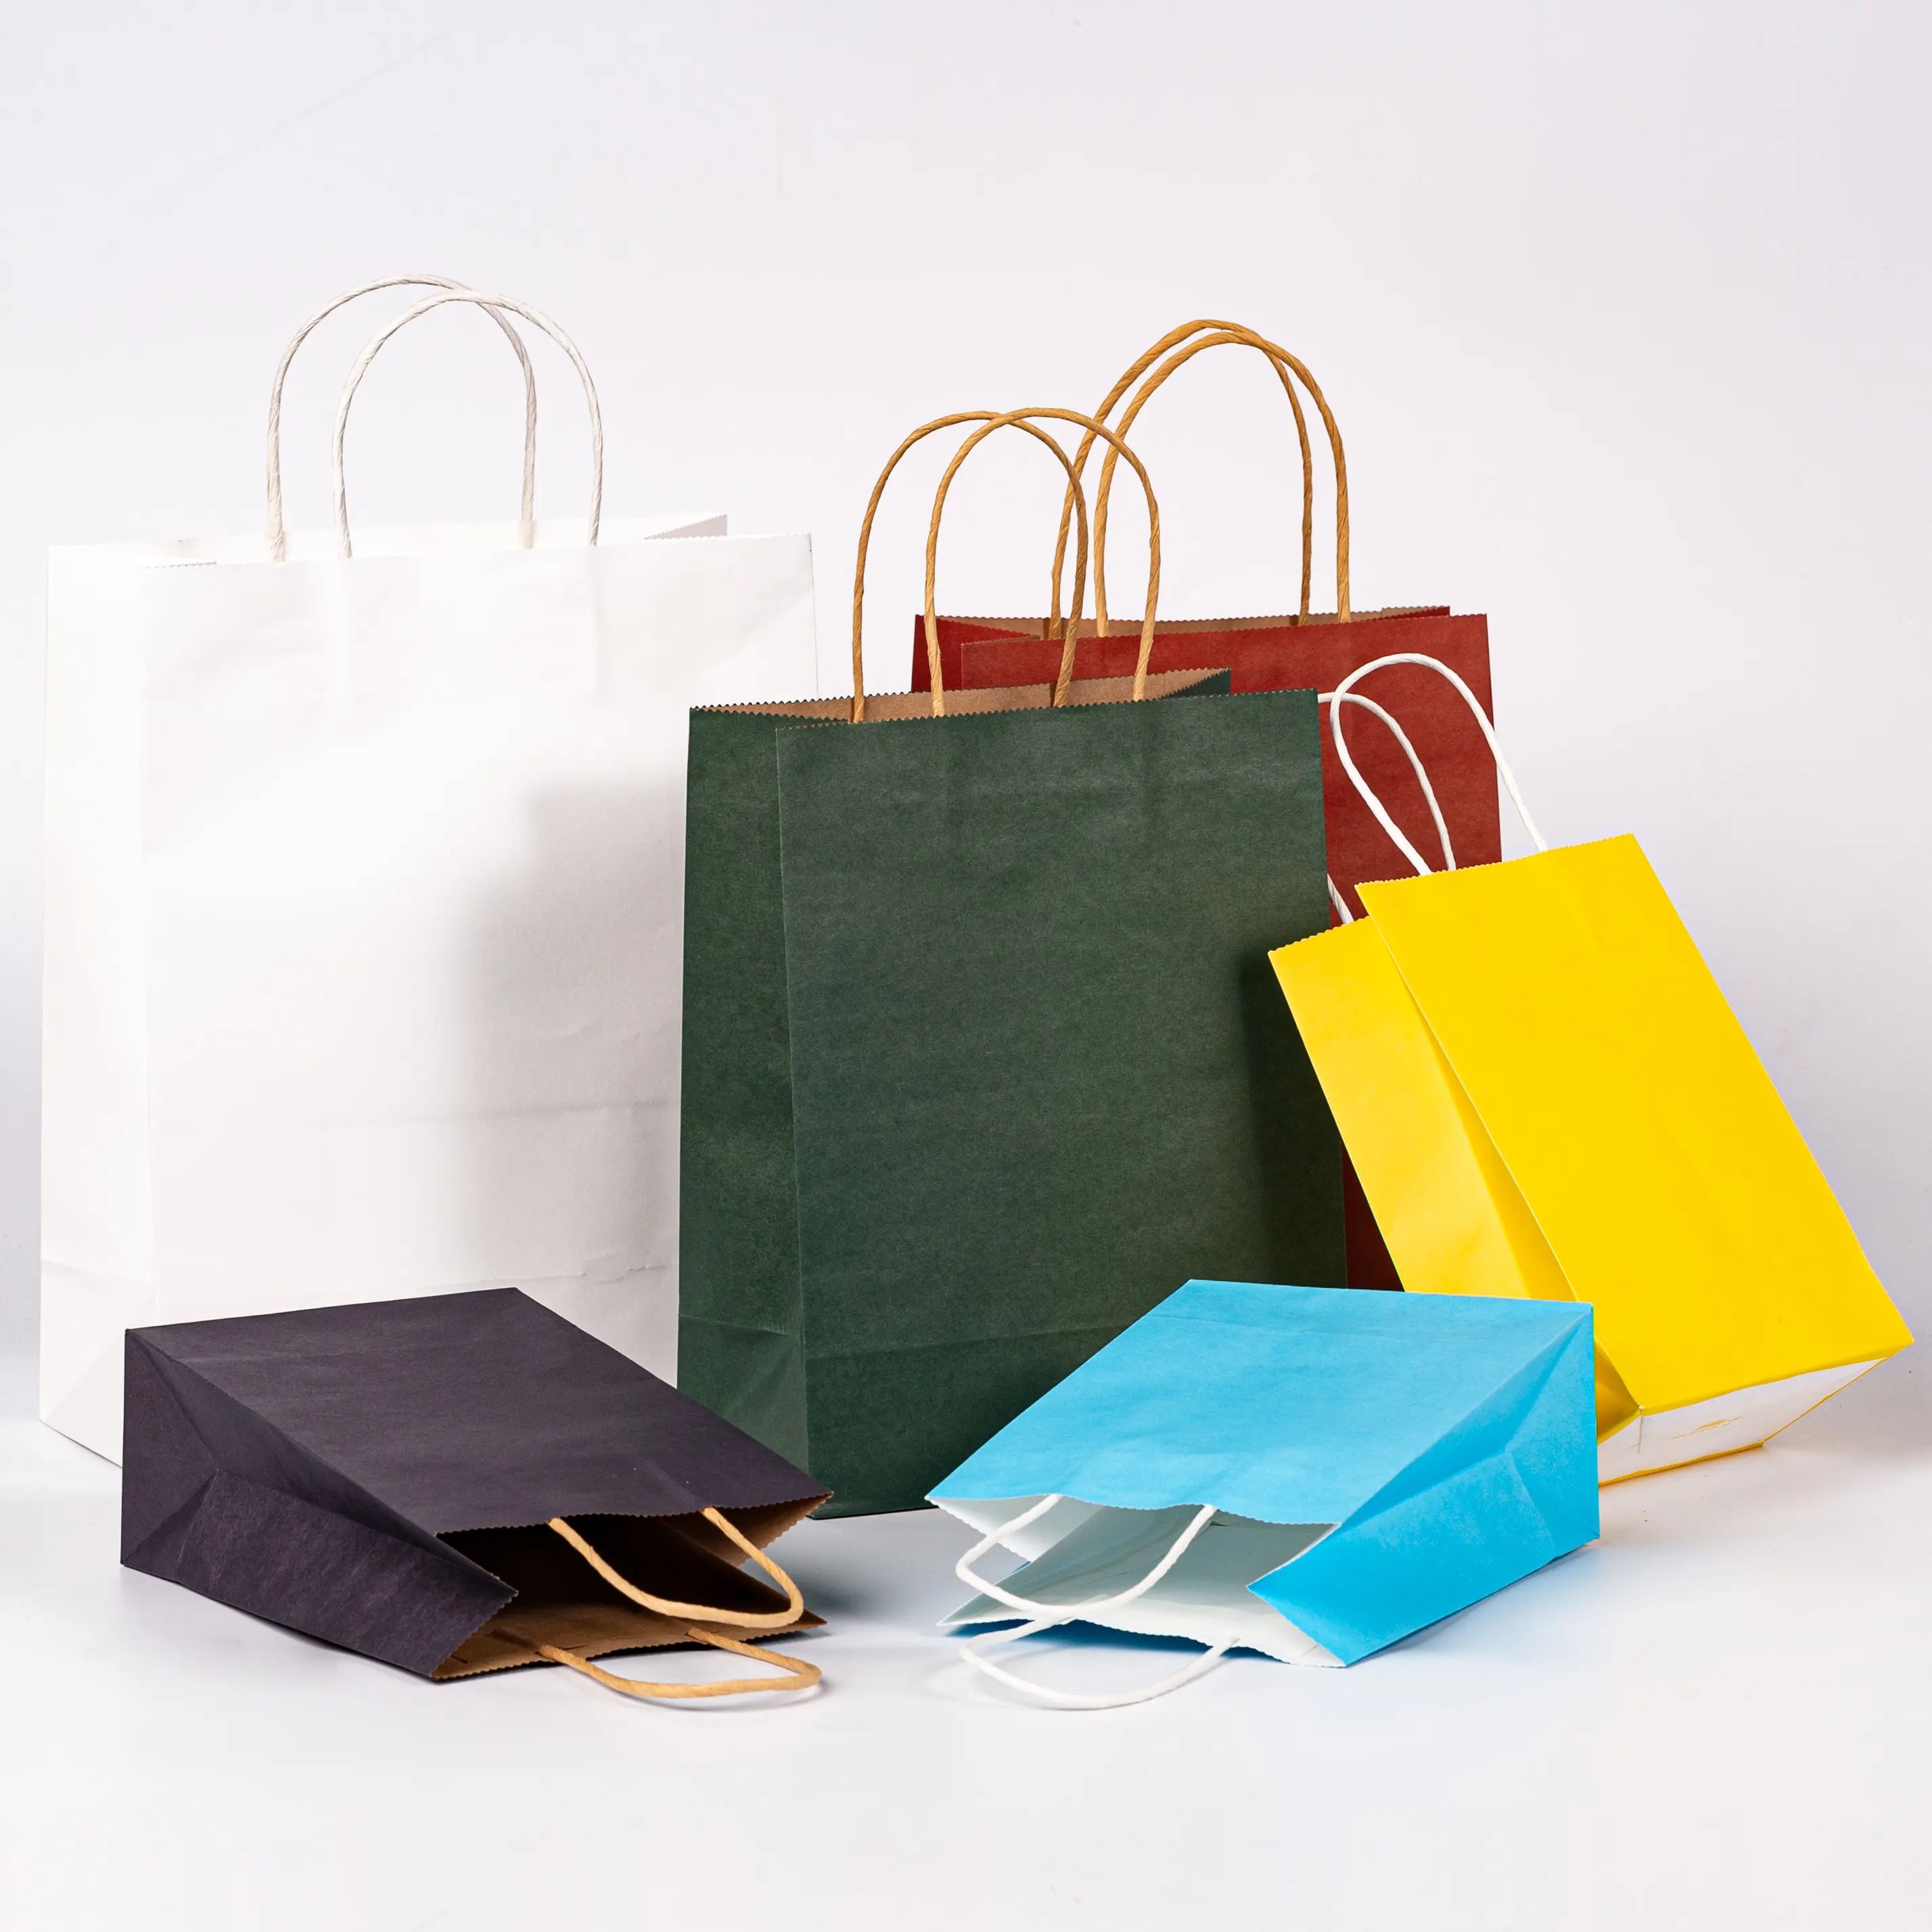 नई आगमन कस्टम सस्ते चीन थोक क्राफ्ट पेपर उपहार बैग संभाल के साथ क्राफ्ट पेपर बैग